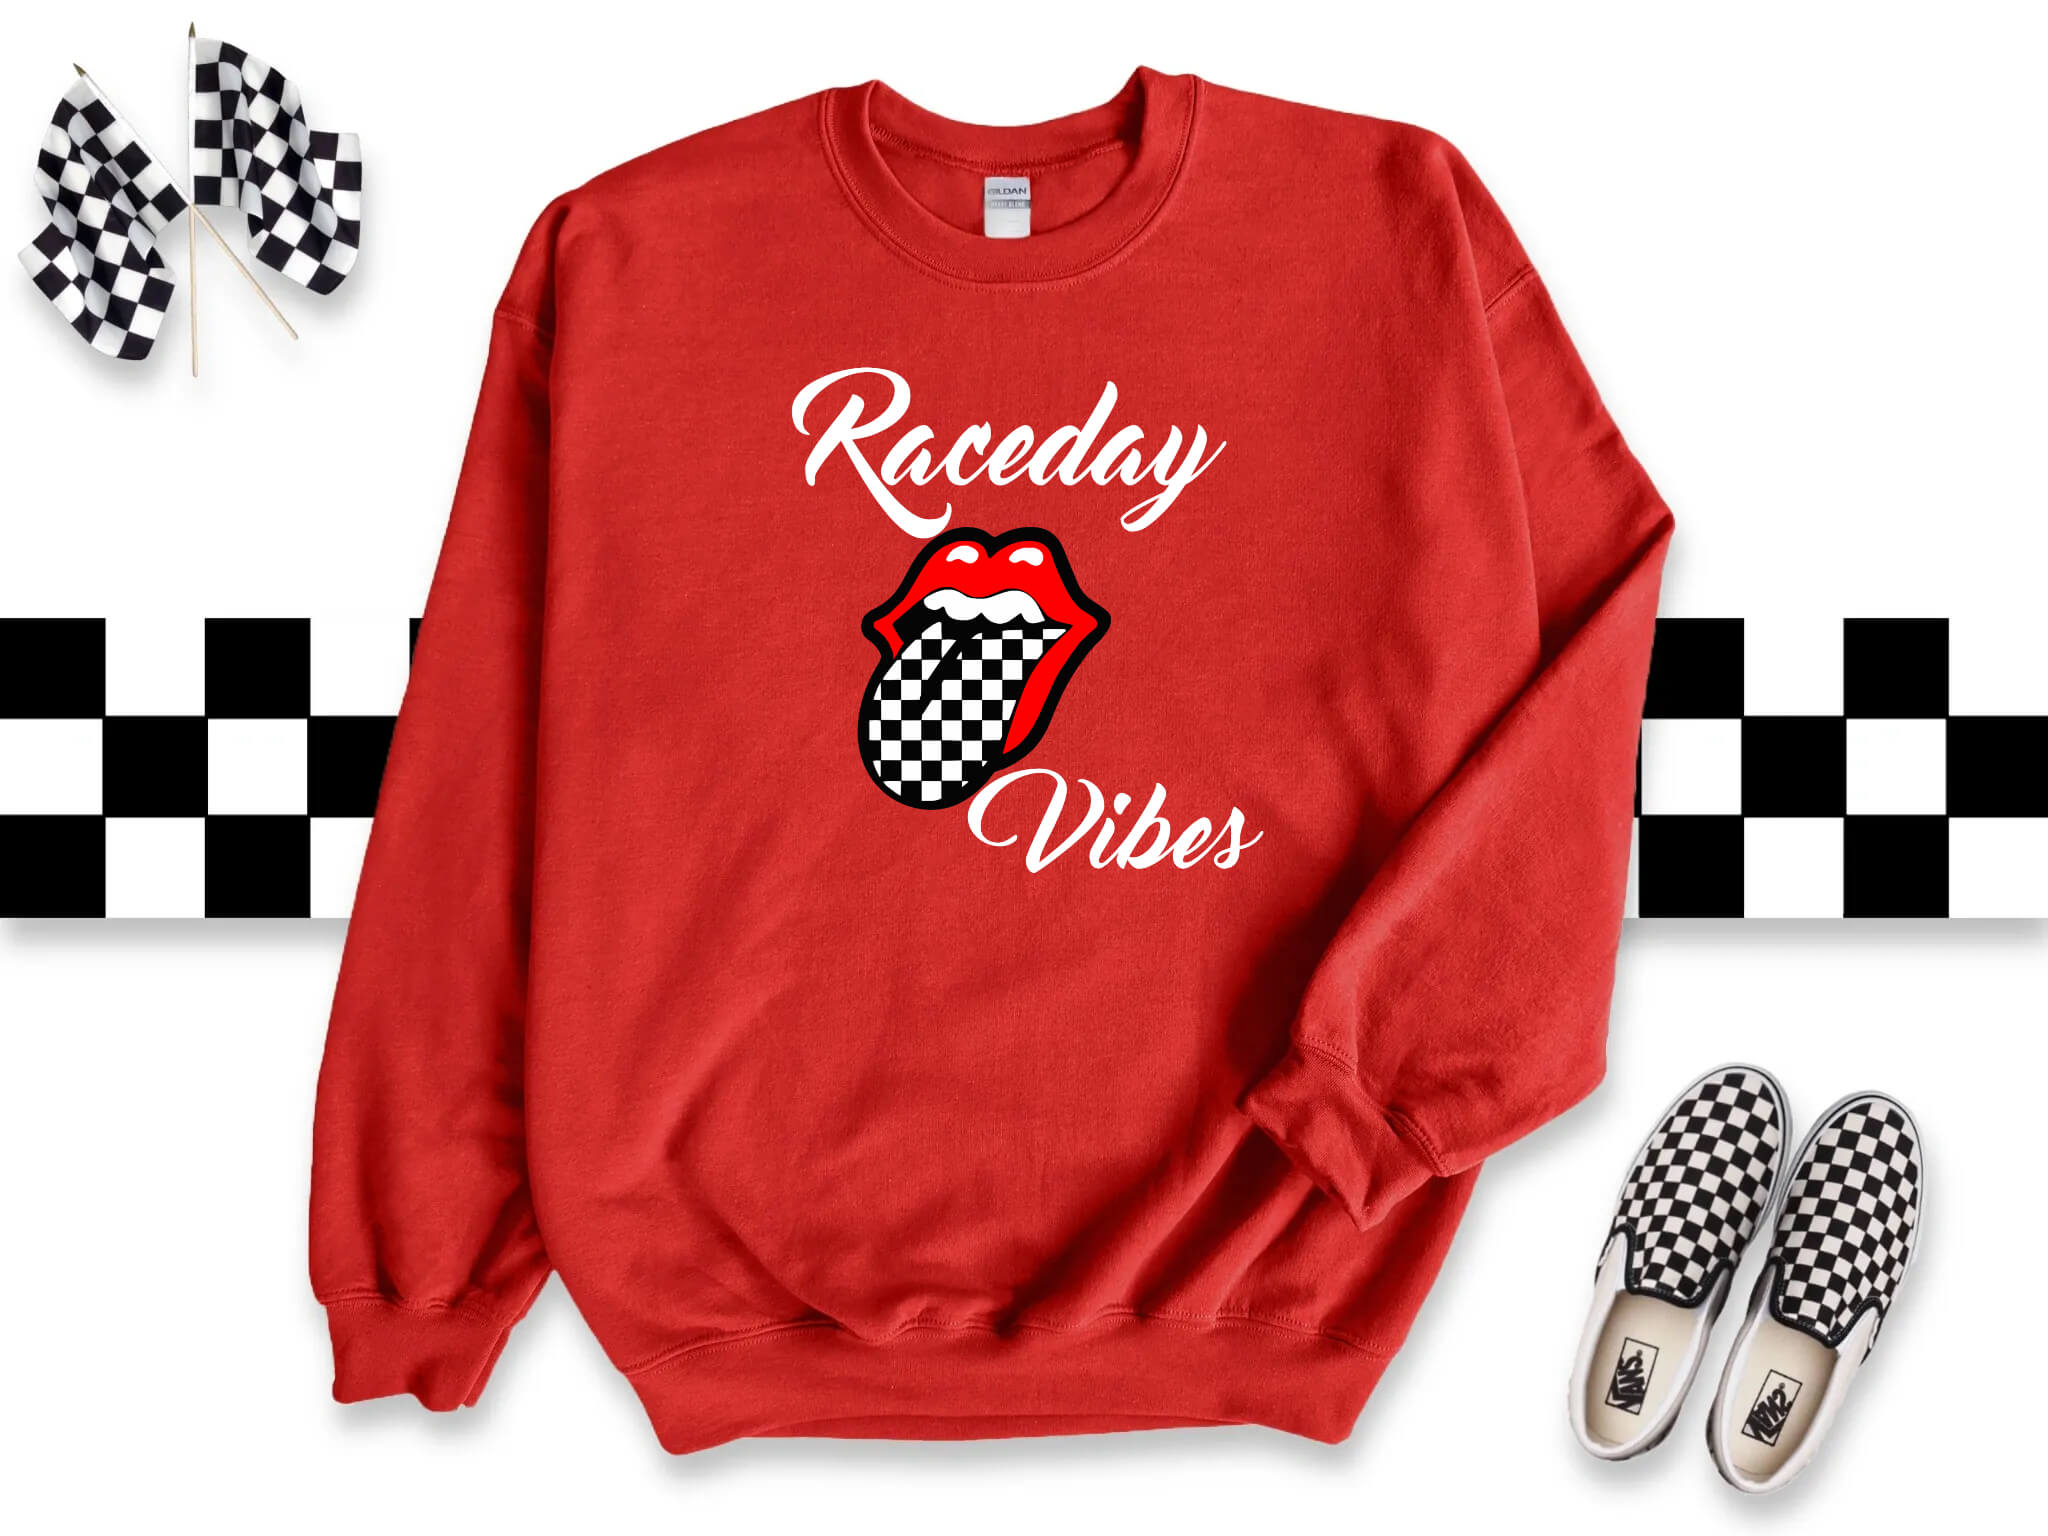 Racing - Raceday Vibes Women's Graphic Print Sweatshirt